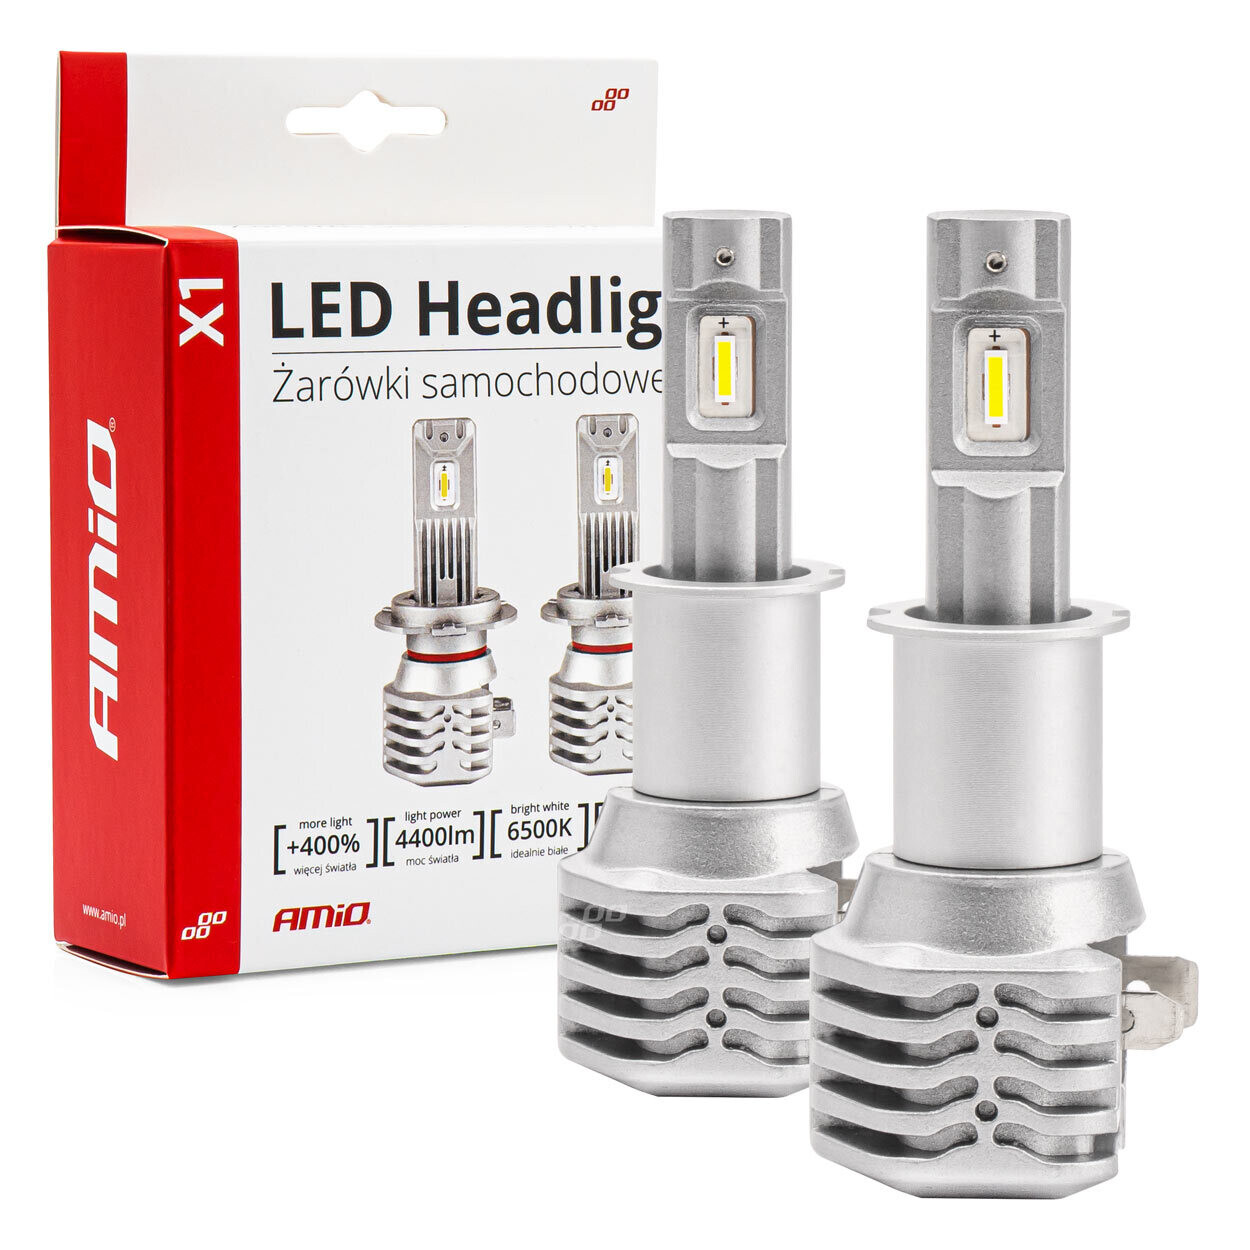 LED Headlight H3 X1 Series AMiO